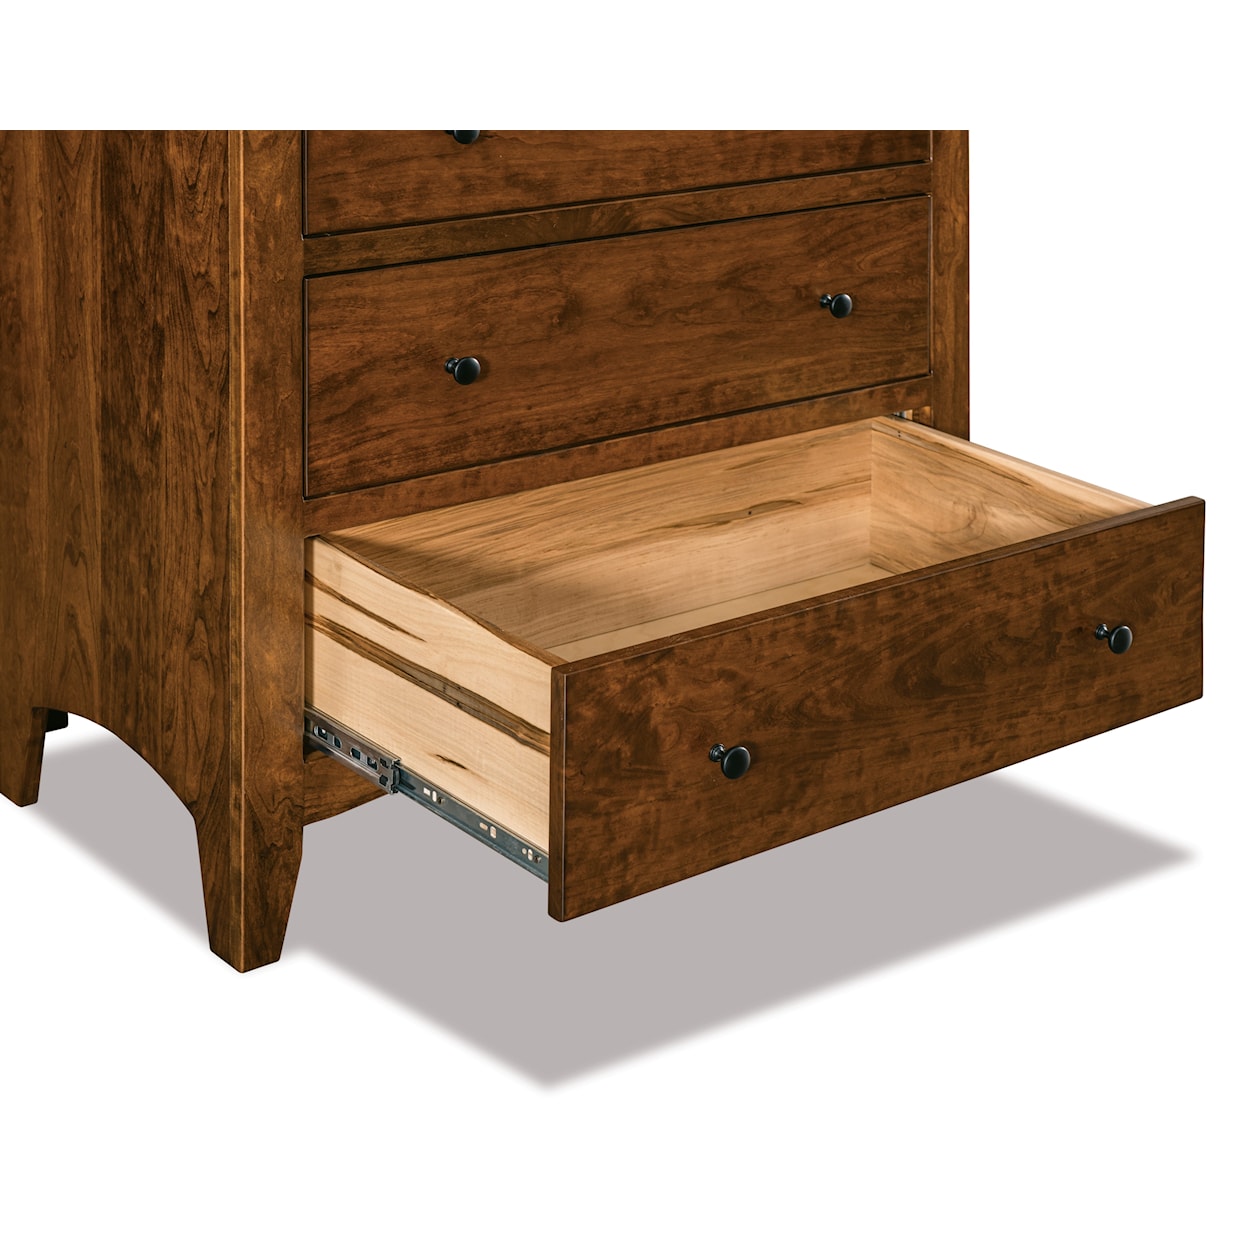 Archbold Furniture Bob Timberlake 5-Drawer Tall Chest